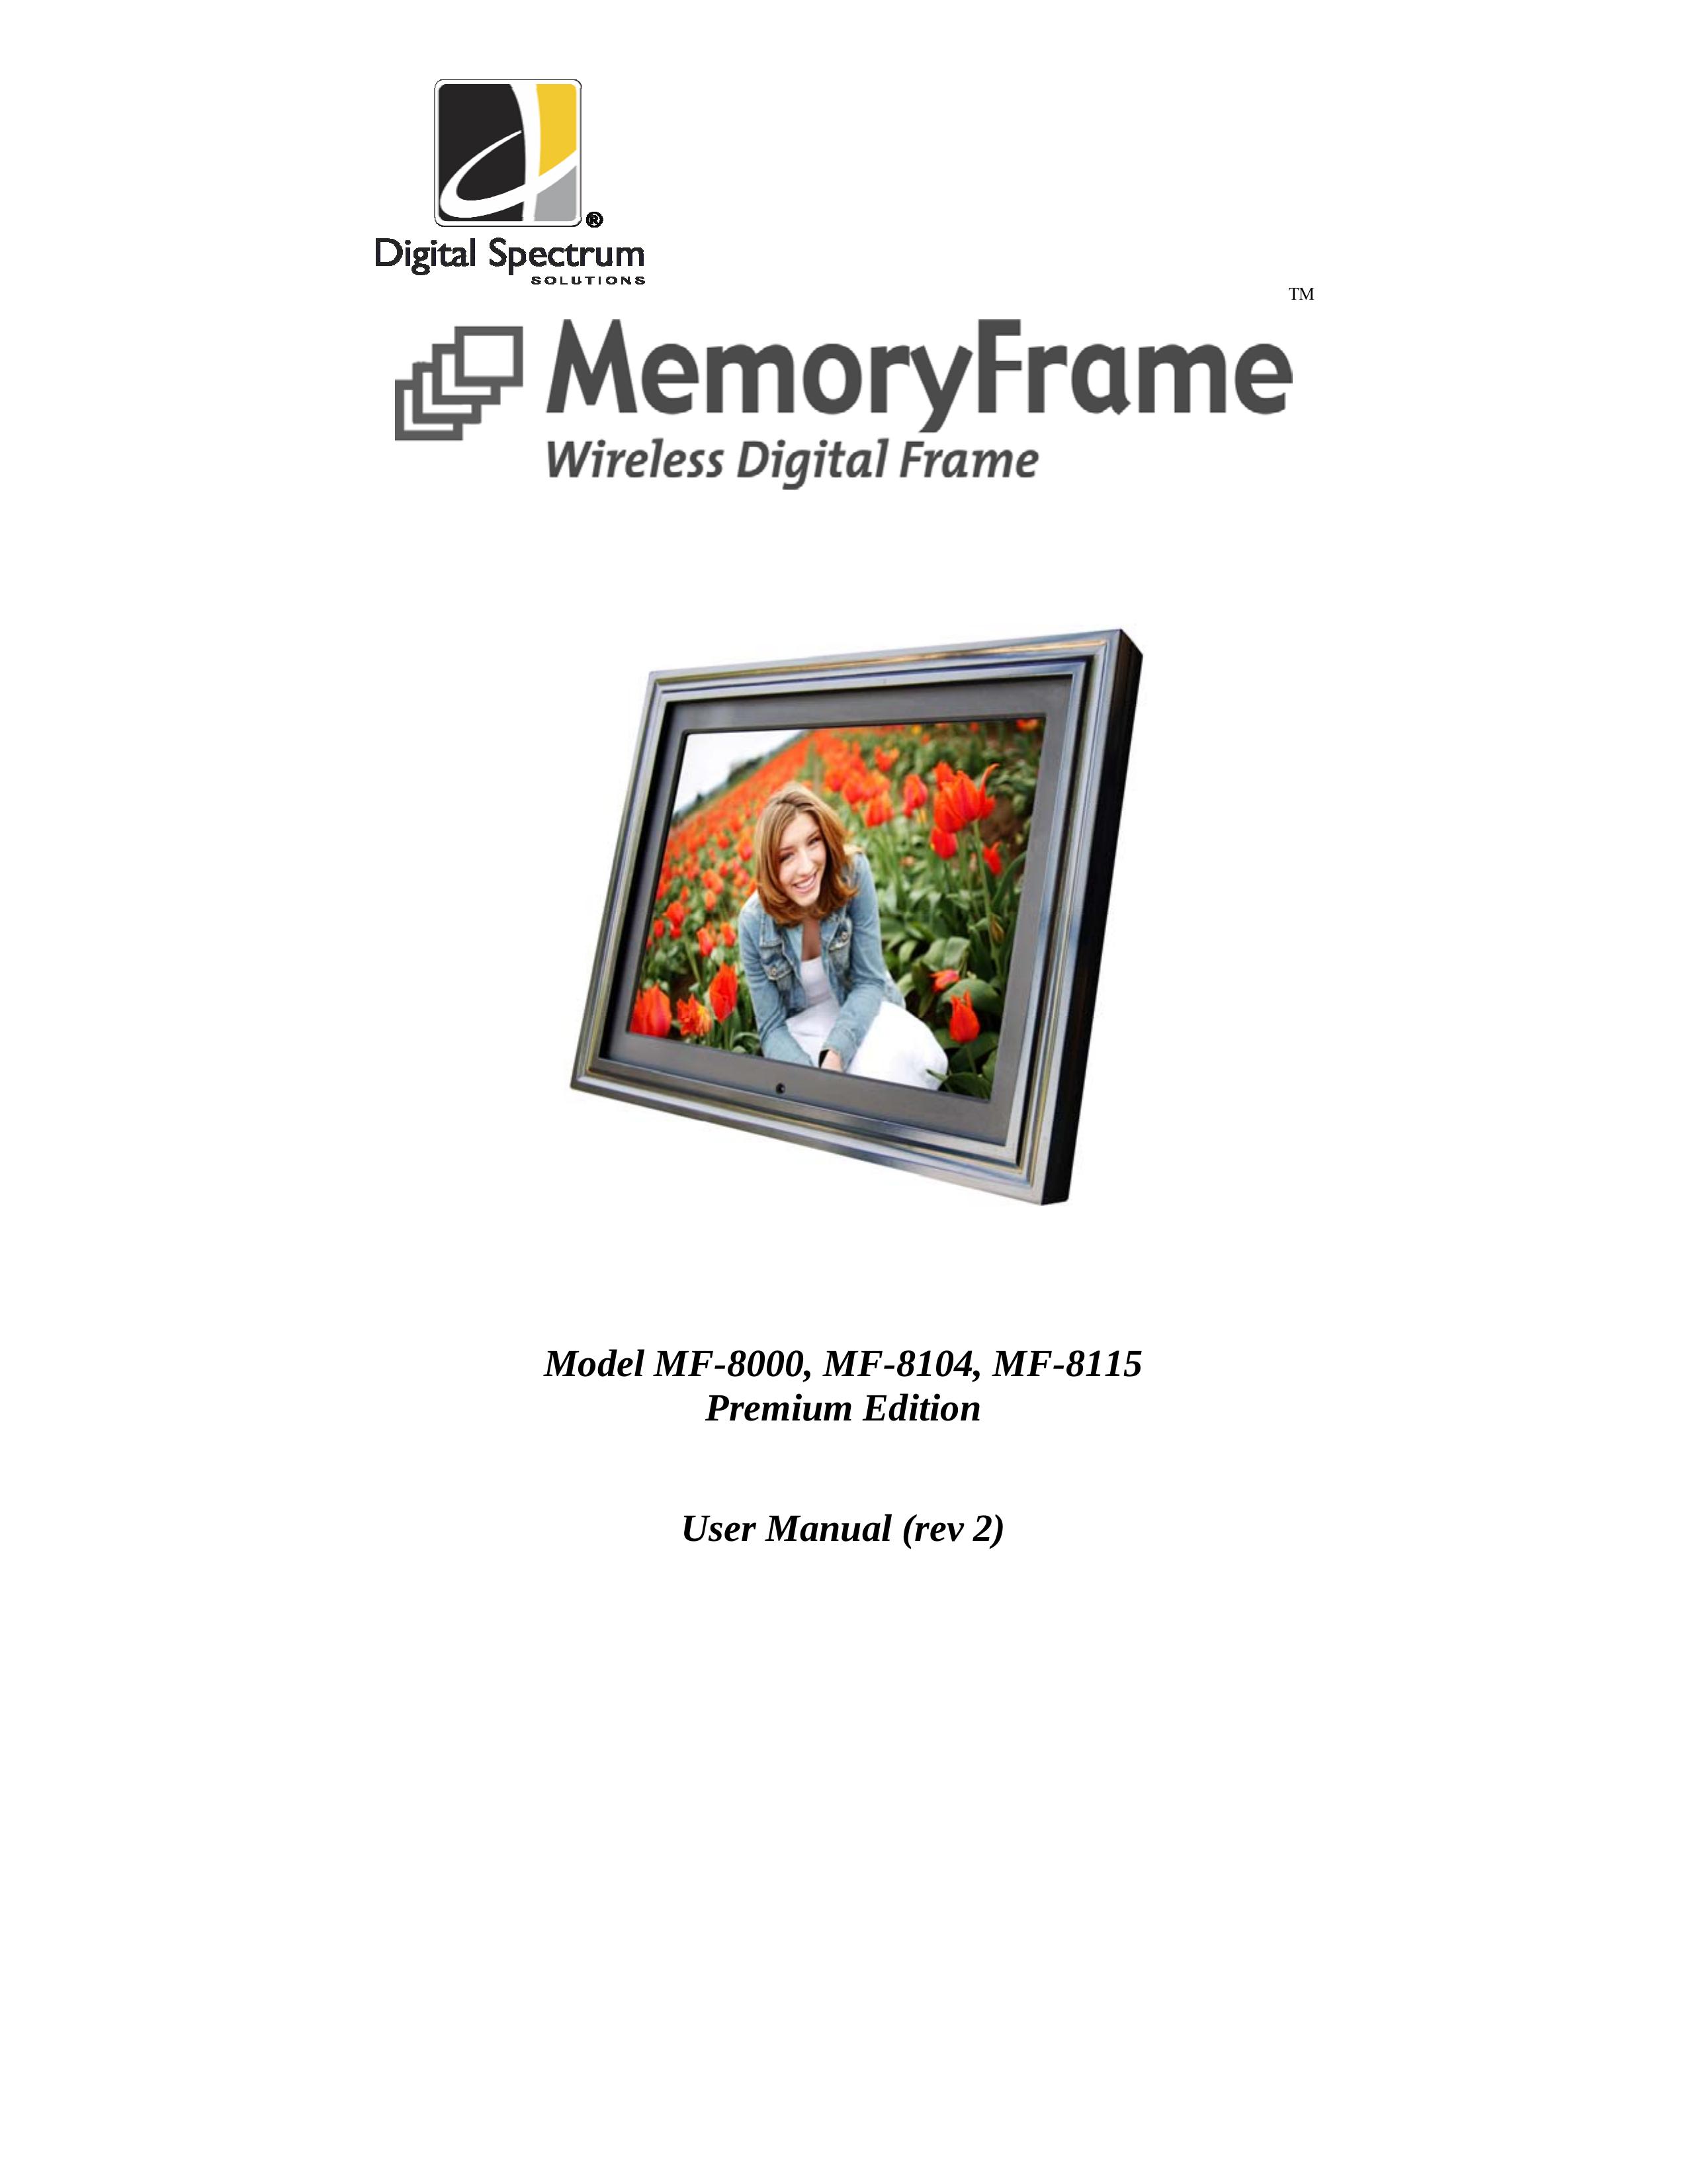 Digital Spectrum MF-8000 Digital Photo Frame User Manual